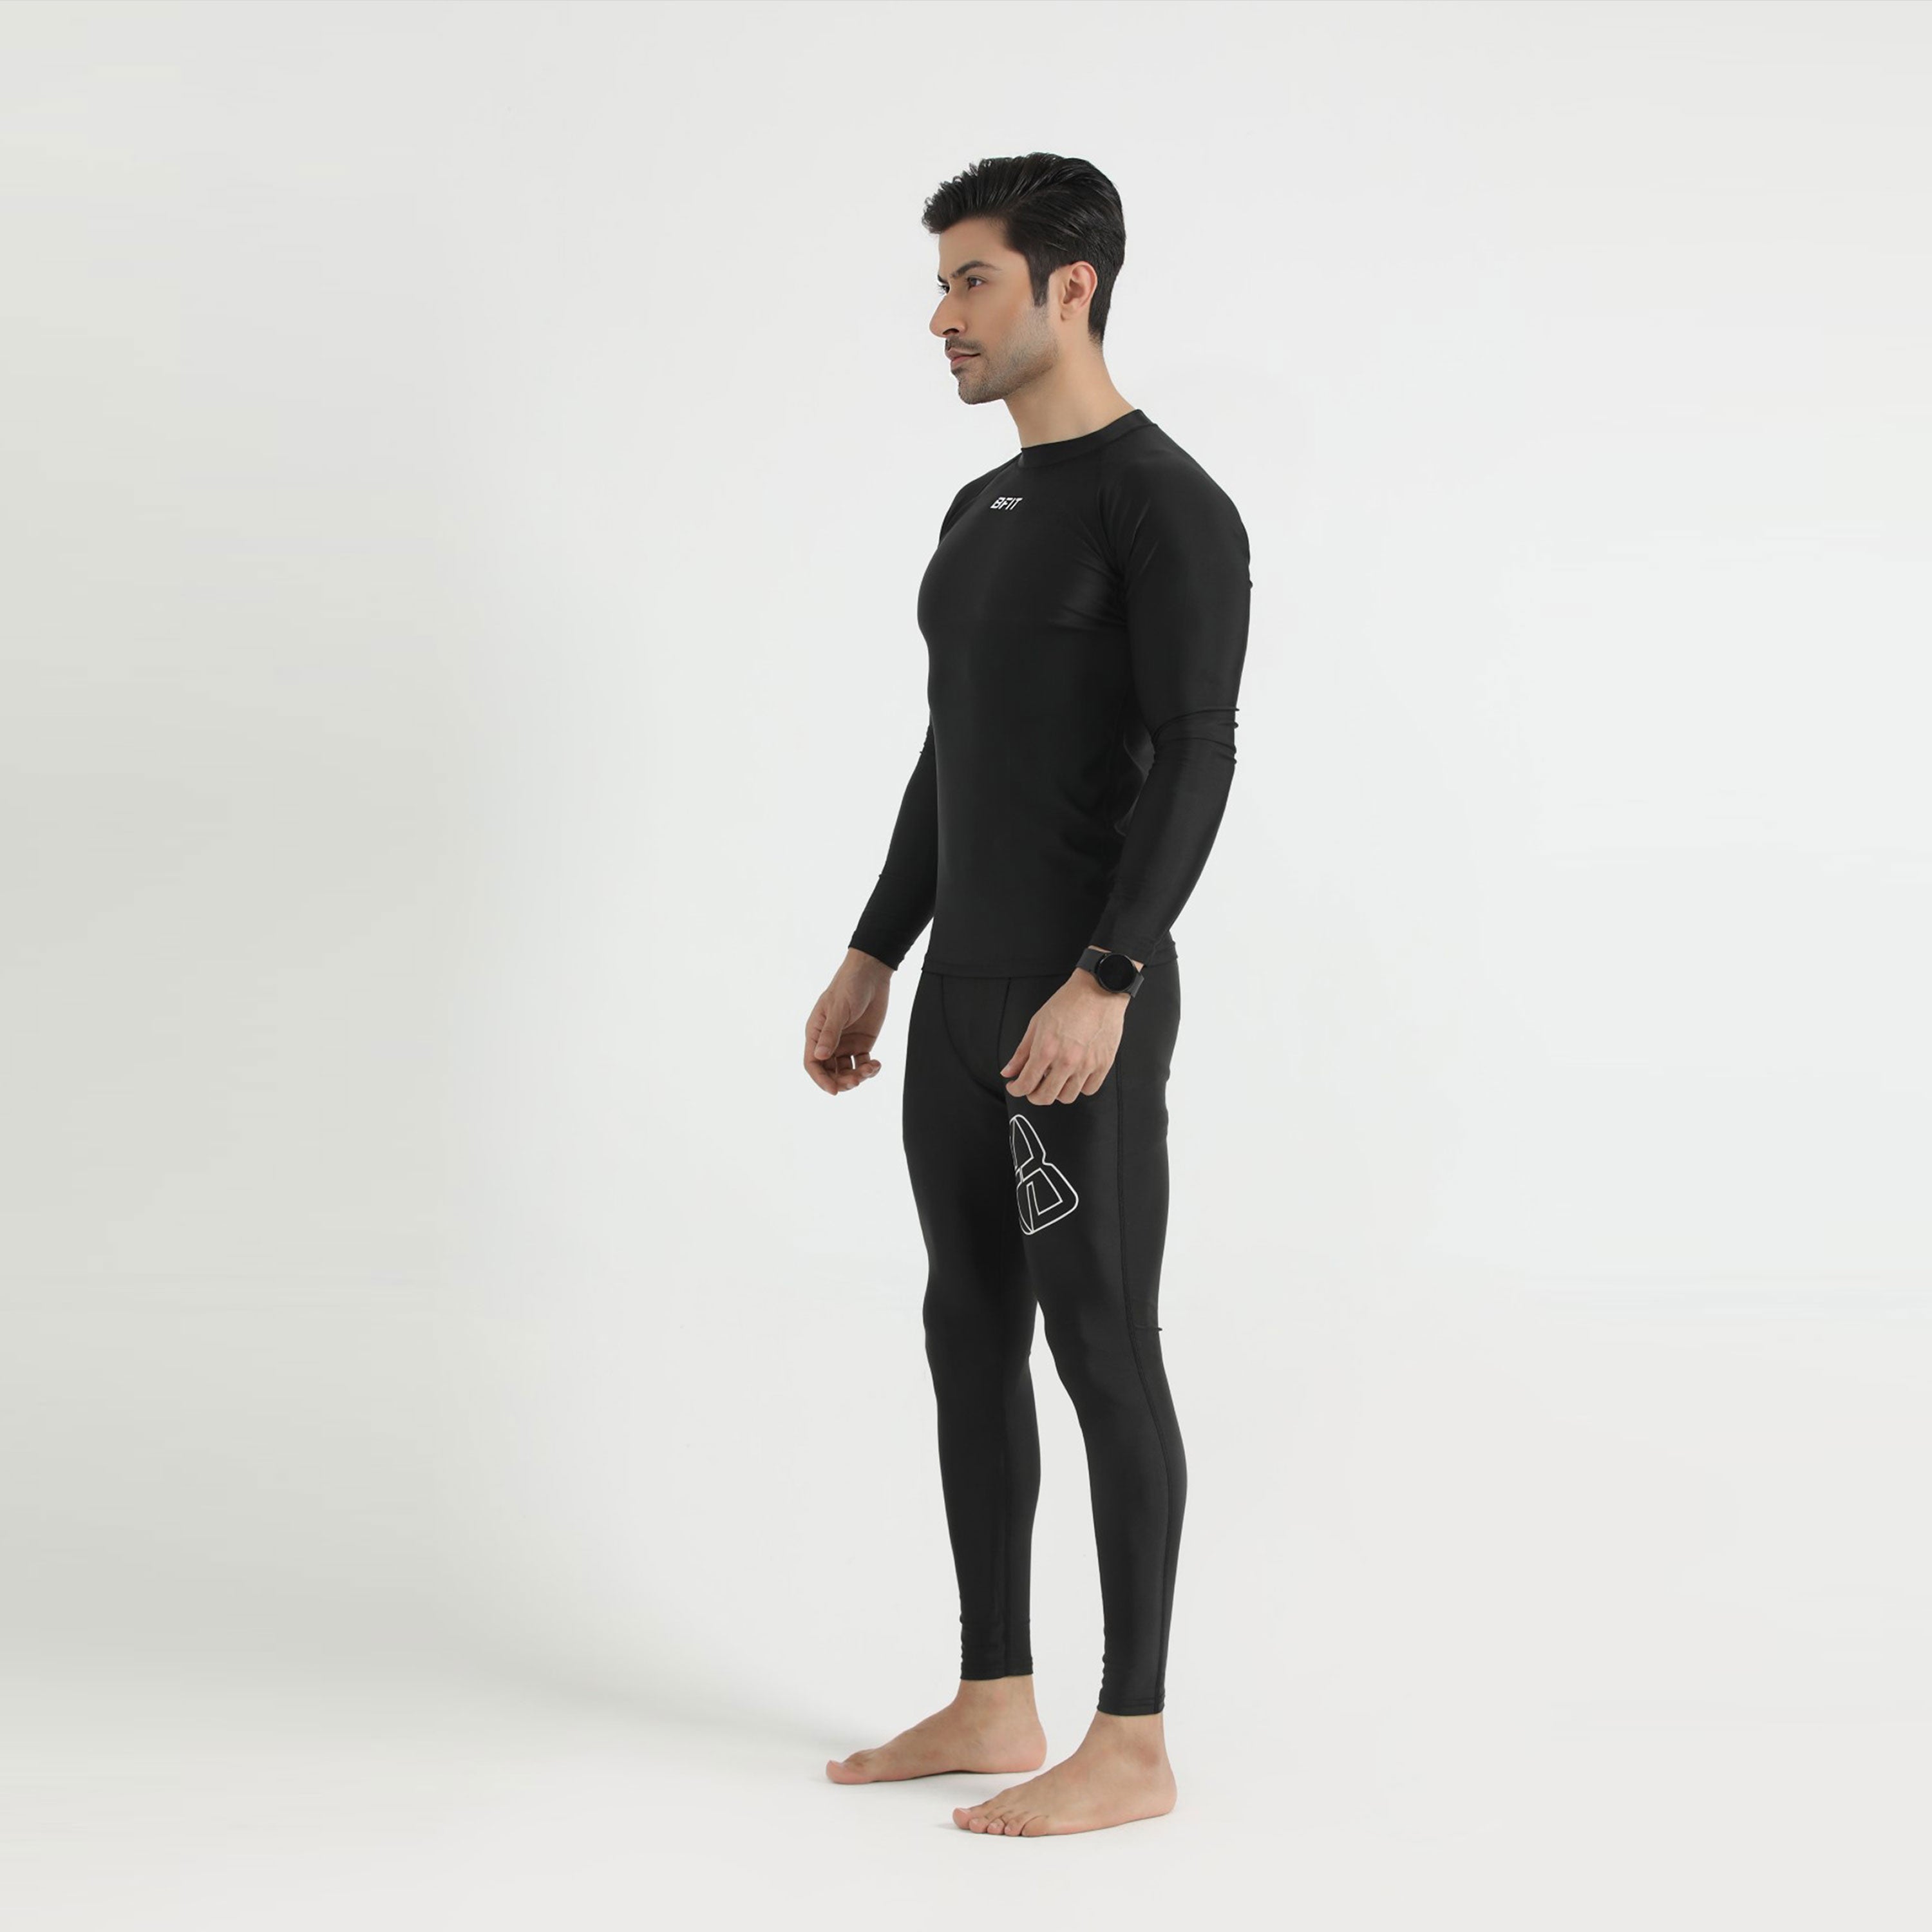 Men's Long Sleeve Compression Shirt  Men's Long Sleeve Workout Shirts – BFIT  Fashion